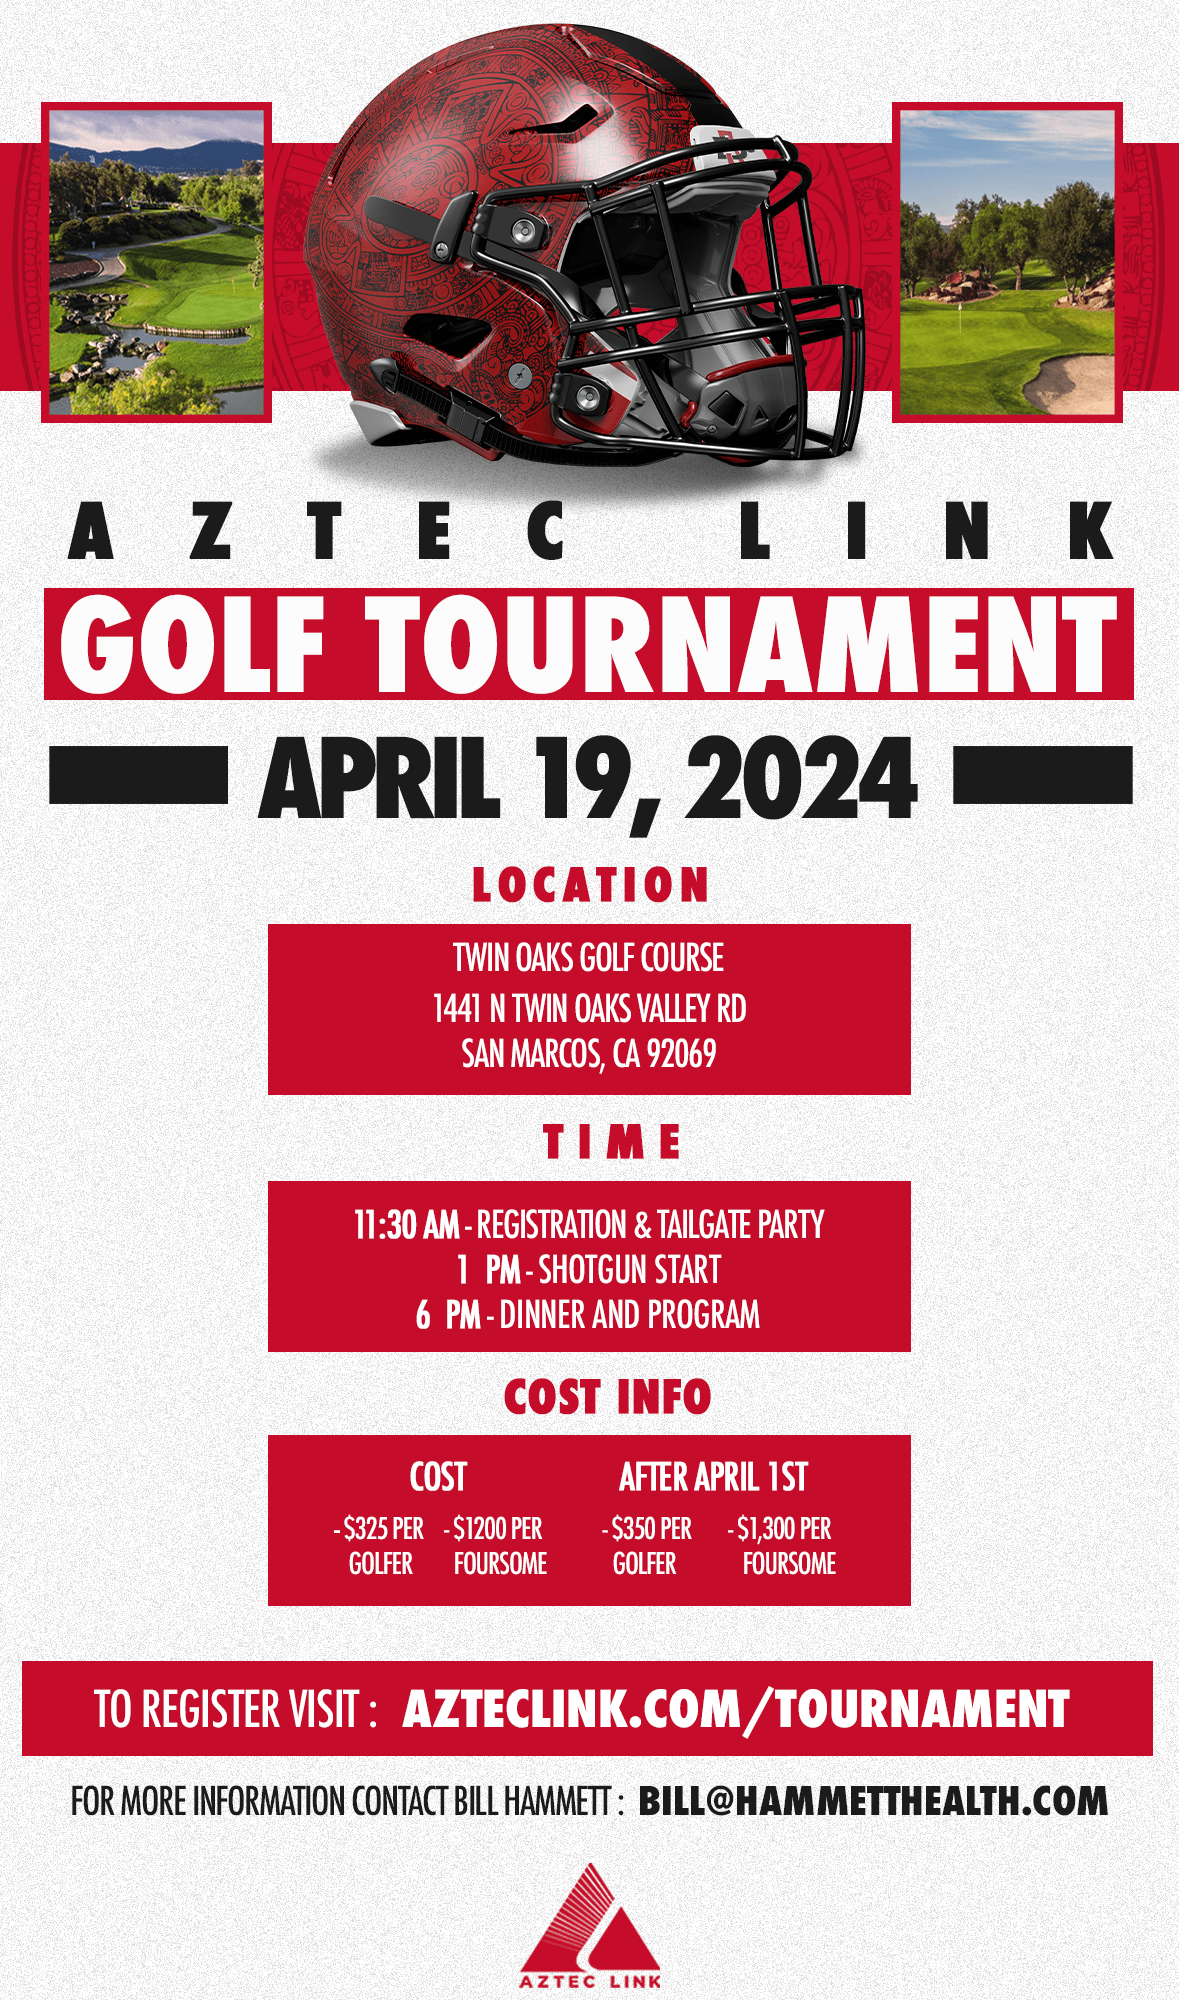 Aztec Link Golf Tournament details